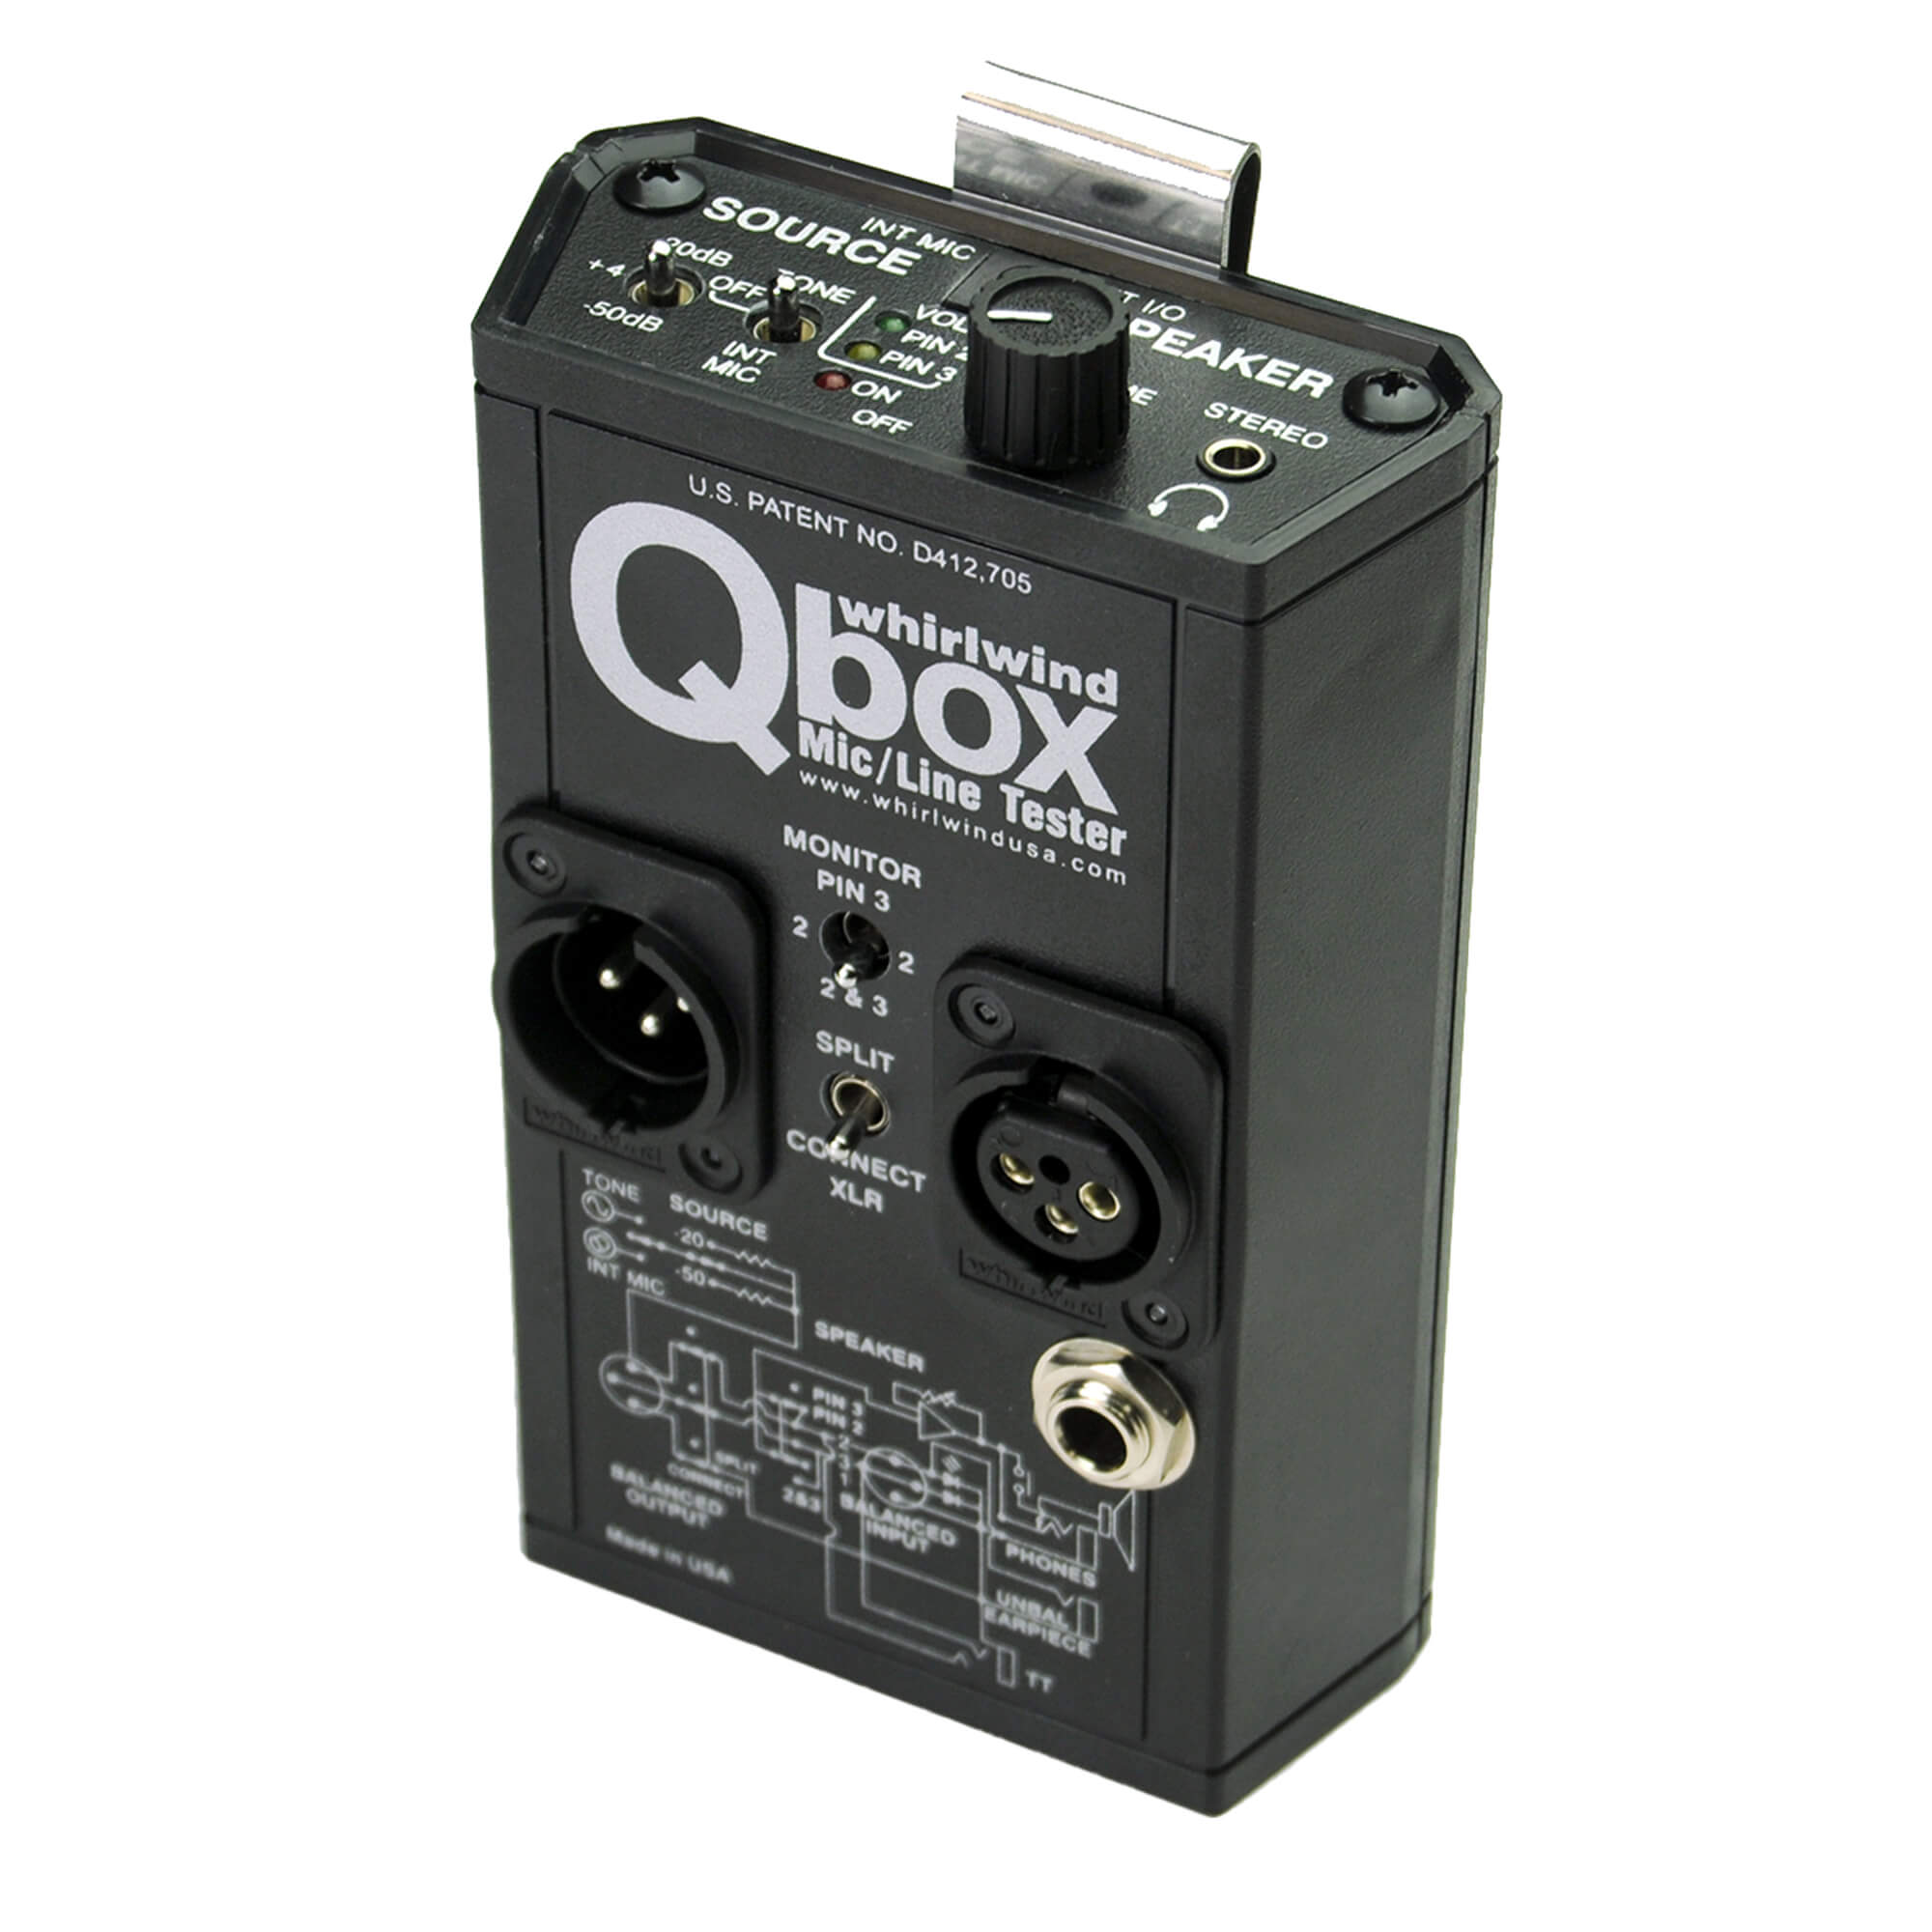 Q-BOX